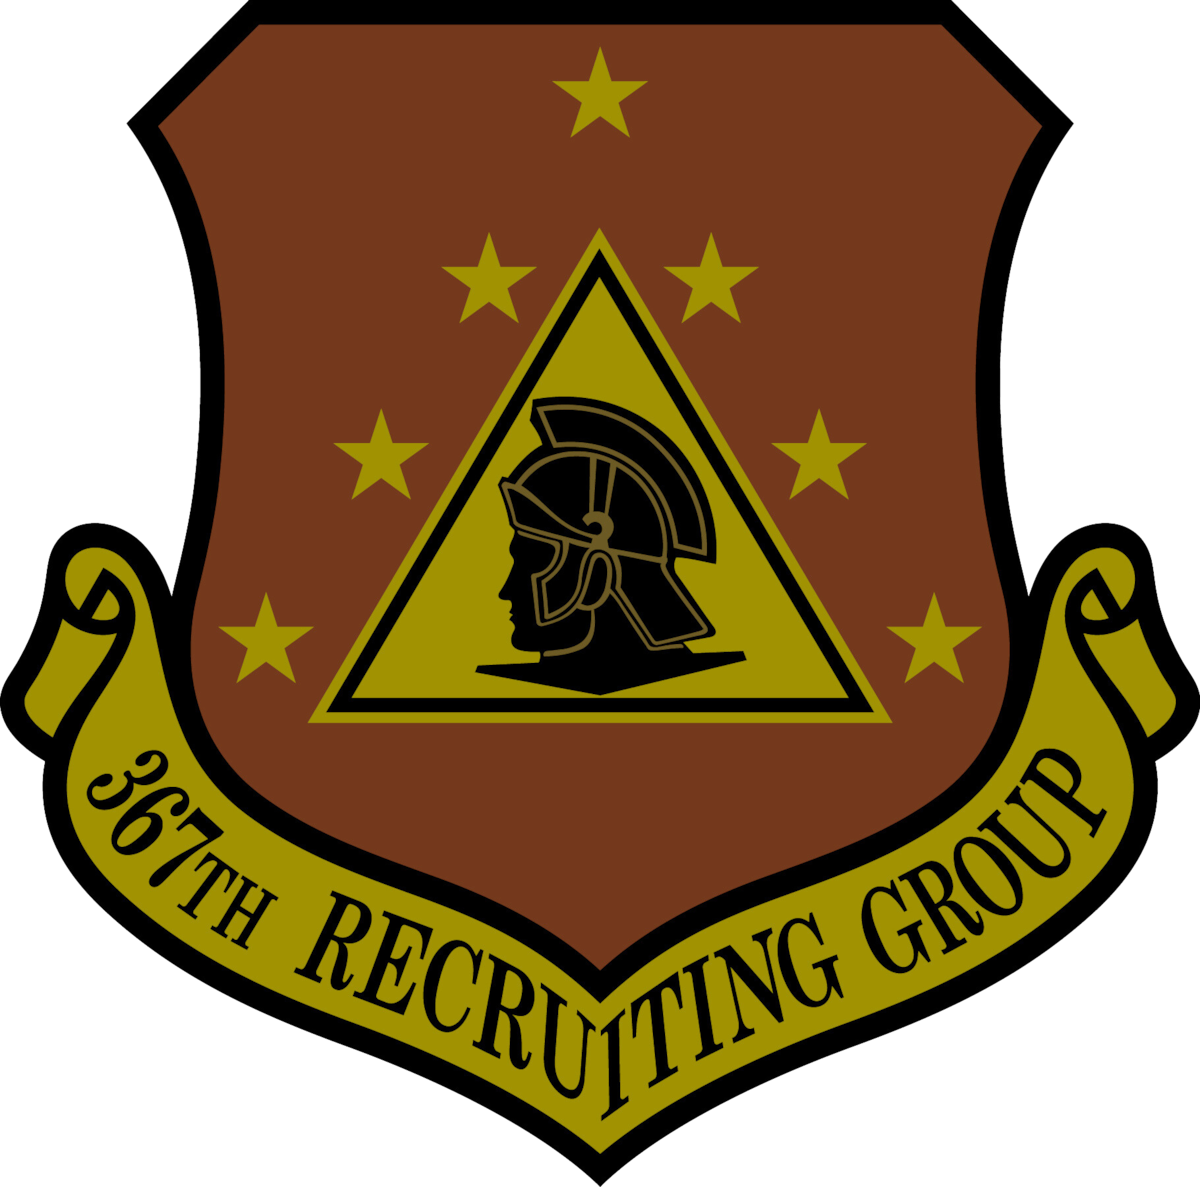 367th Recruiting Group OCP Shield